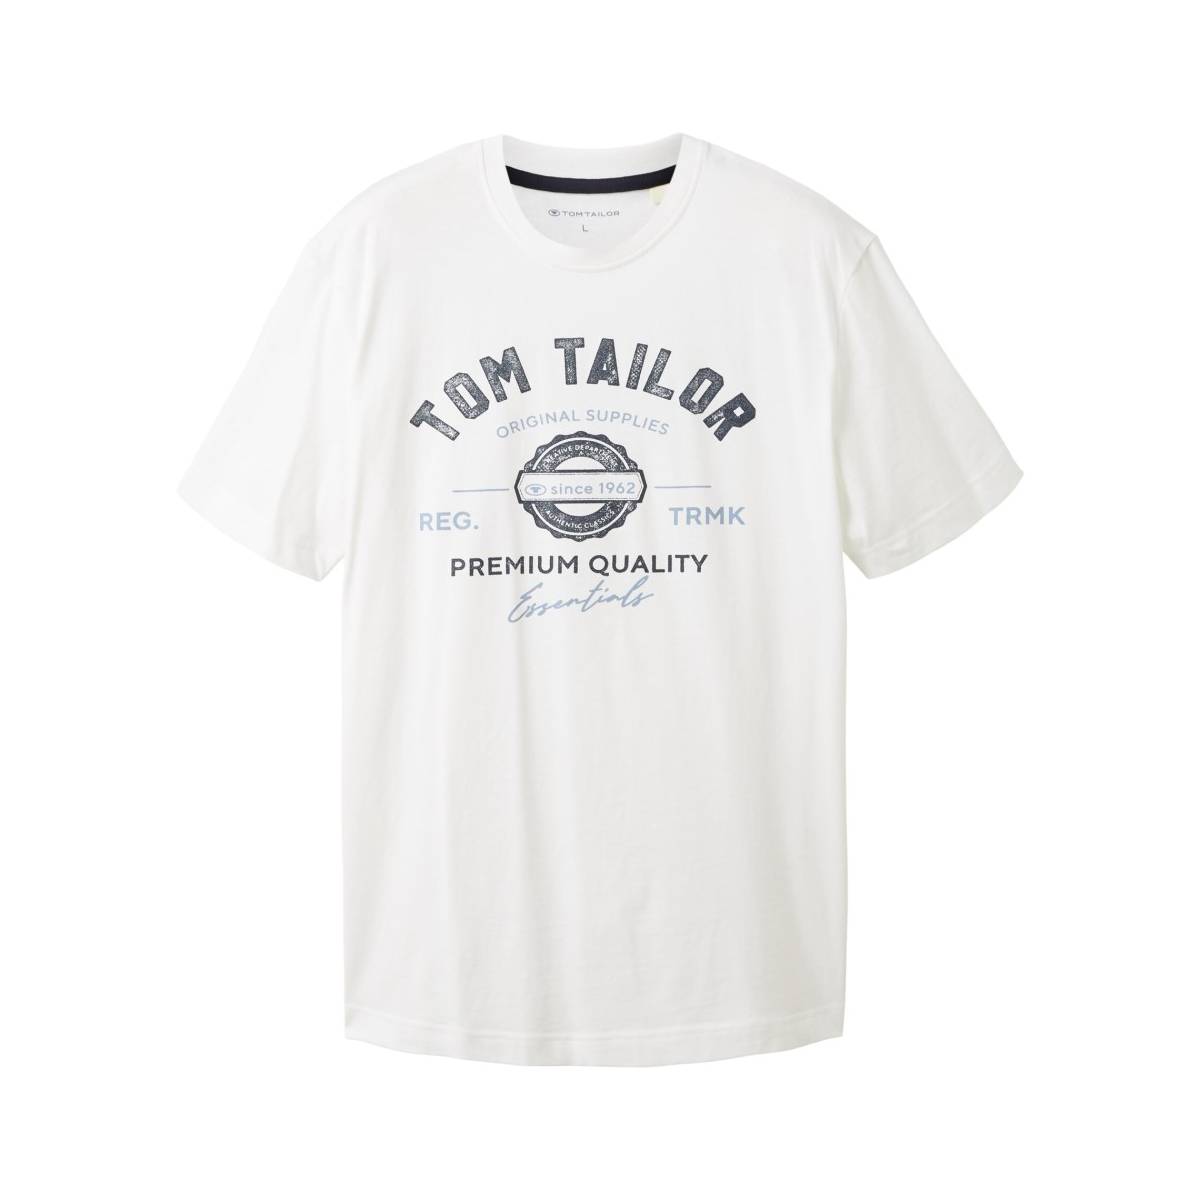 TOM TAILOR  t shirts wit -  model 1037735 - Herenkleding t shirts wit